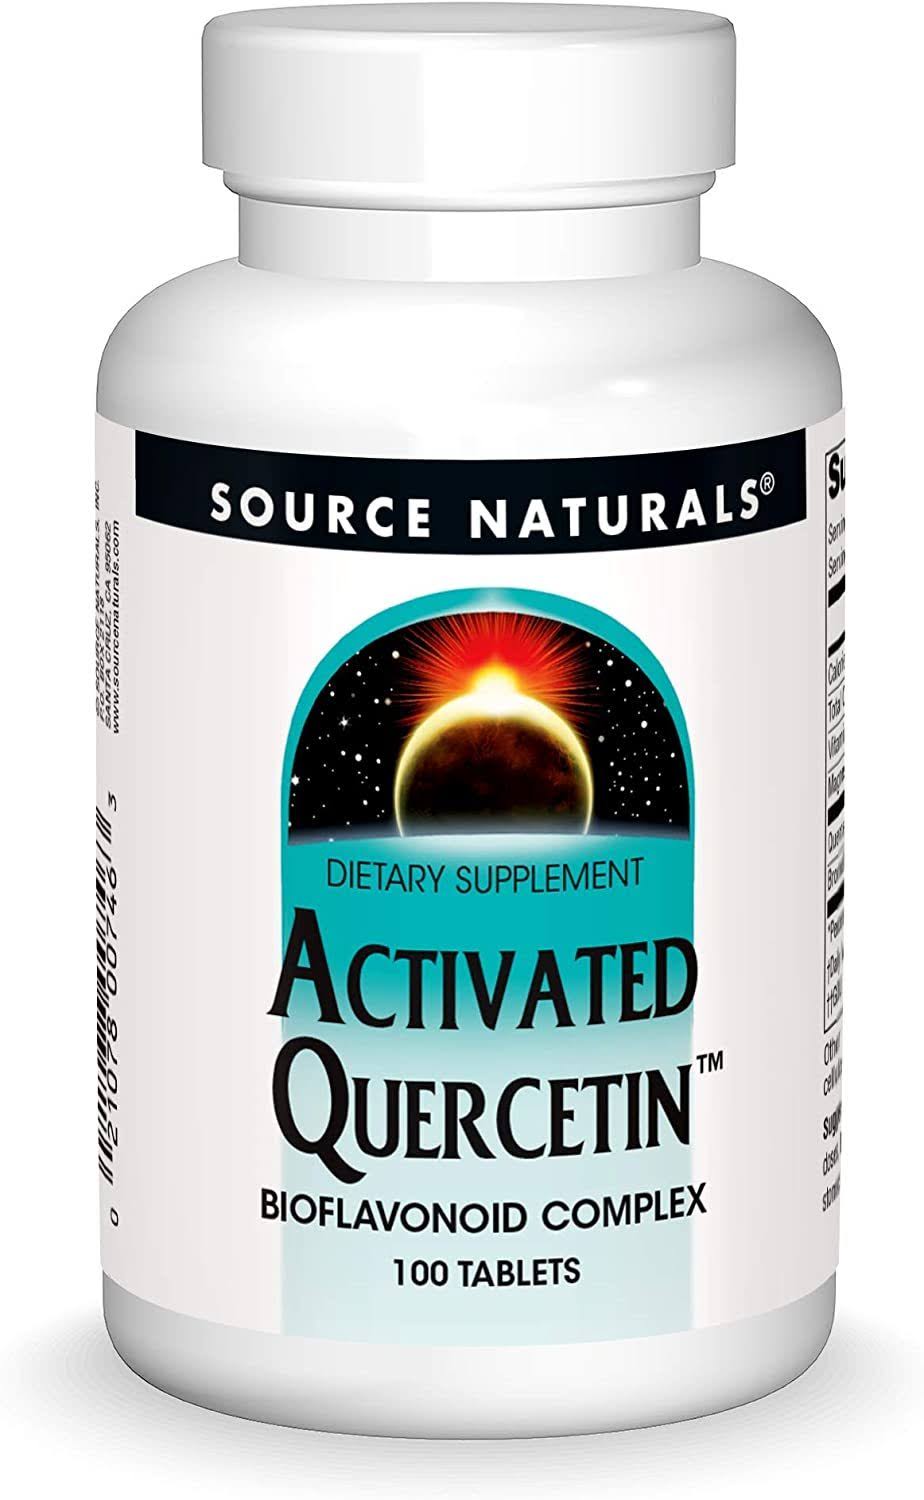 Source Naturals Activated Quercetin - 100 Tablets